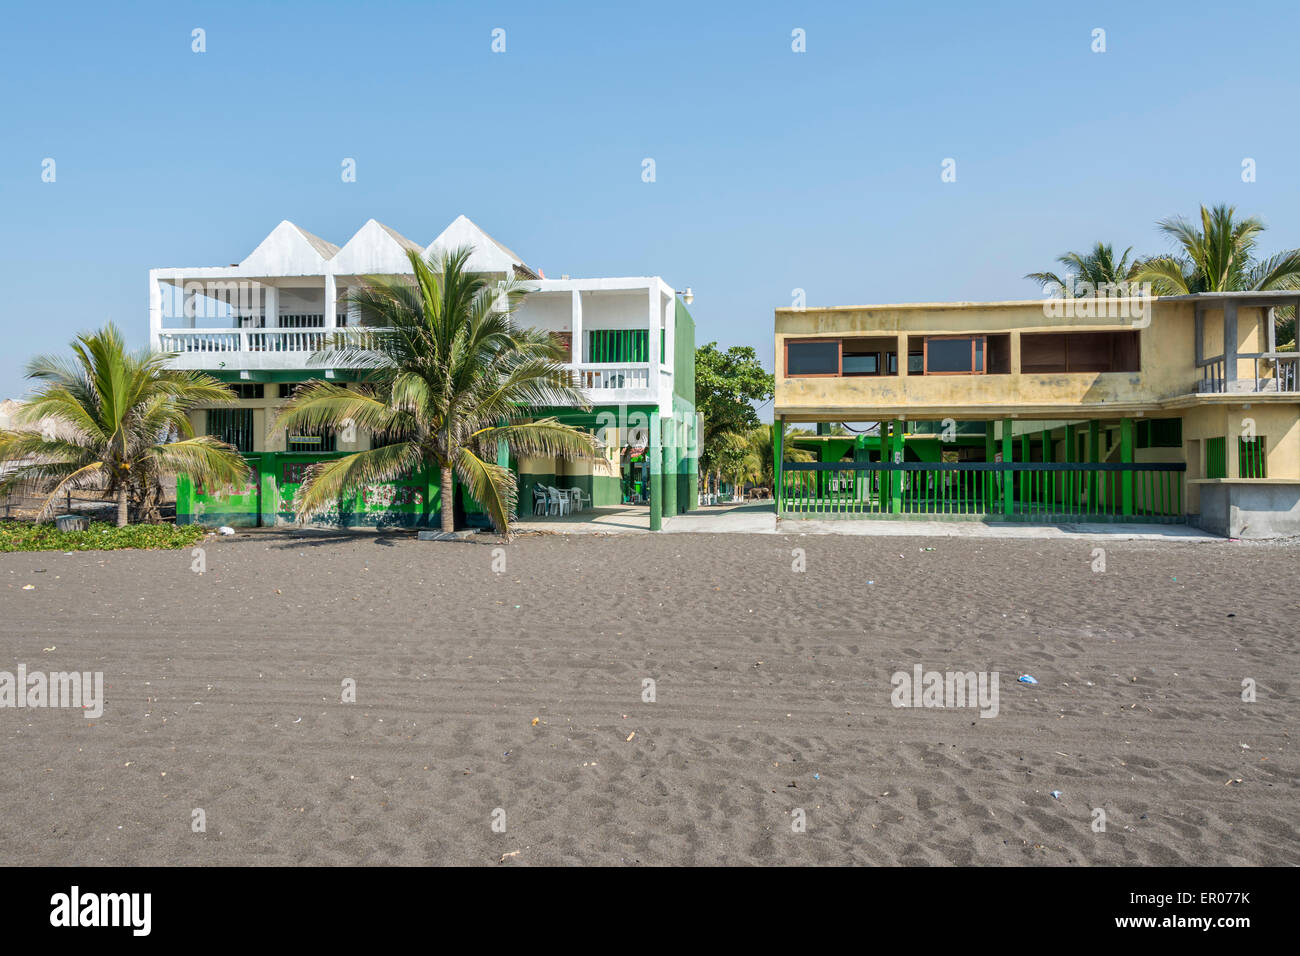 Hotel on the beach at El Hawaii Guatemala Stock Photo